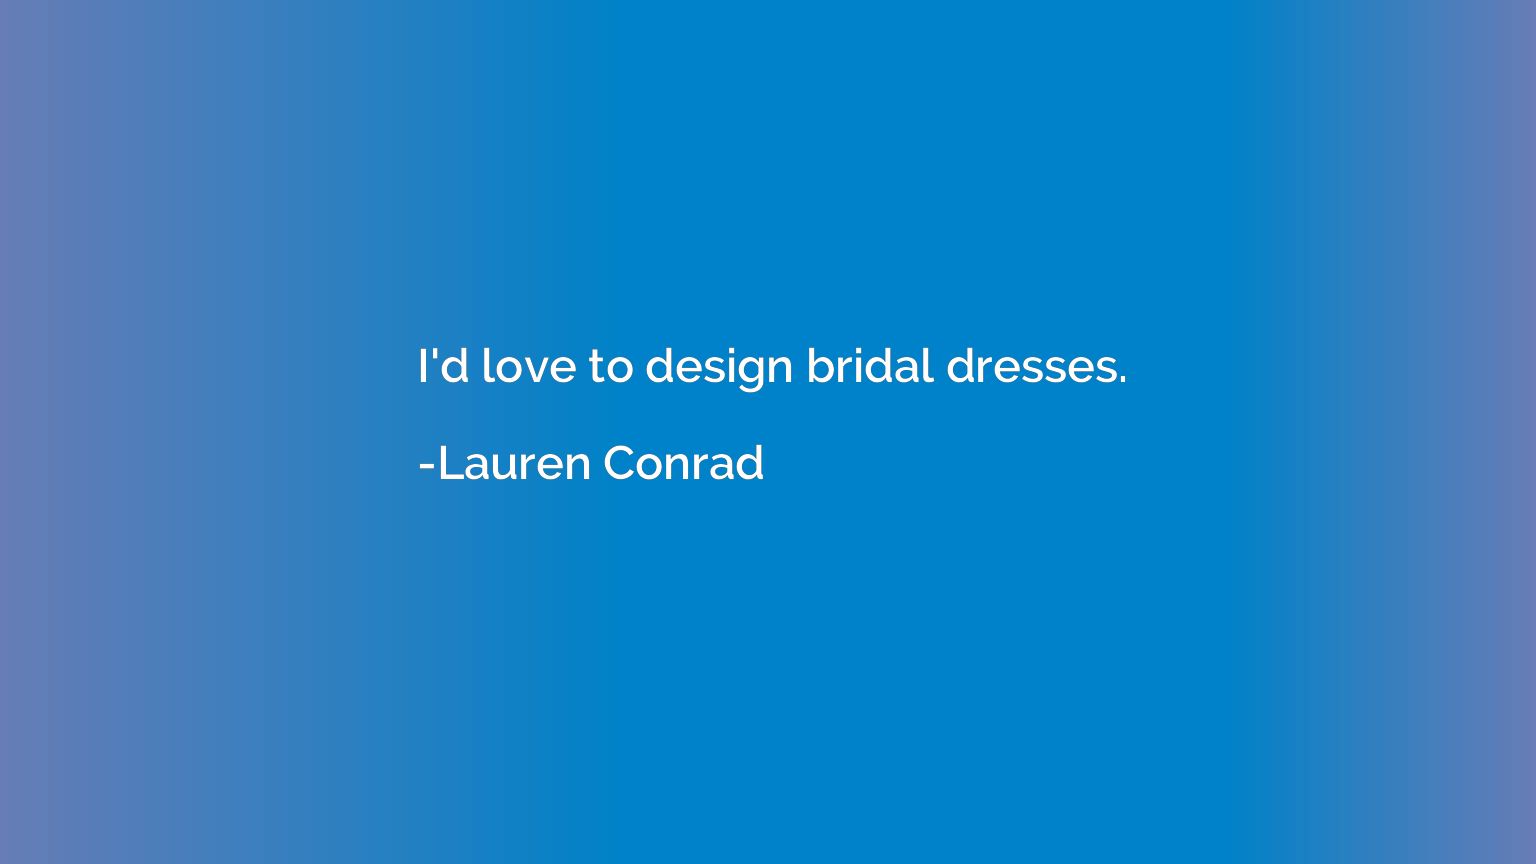 I'd love to design bridal dresses.